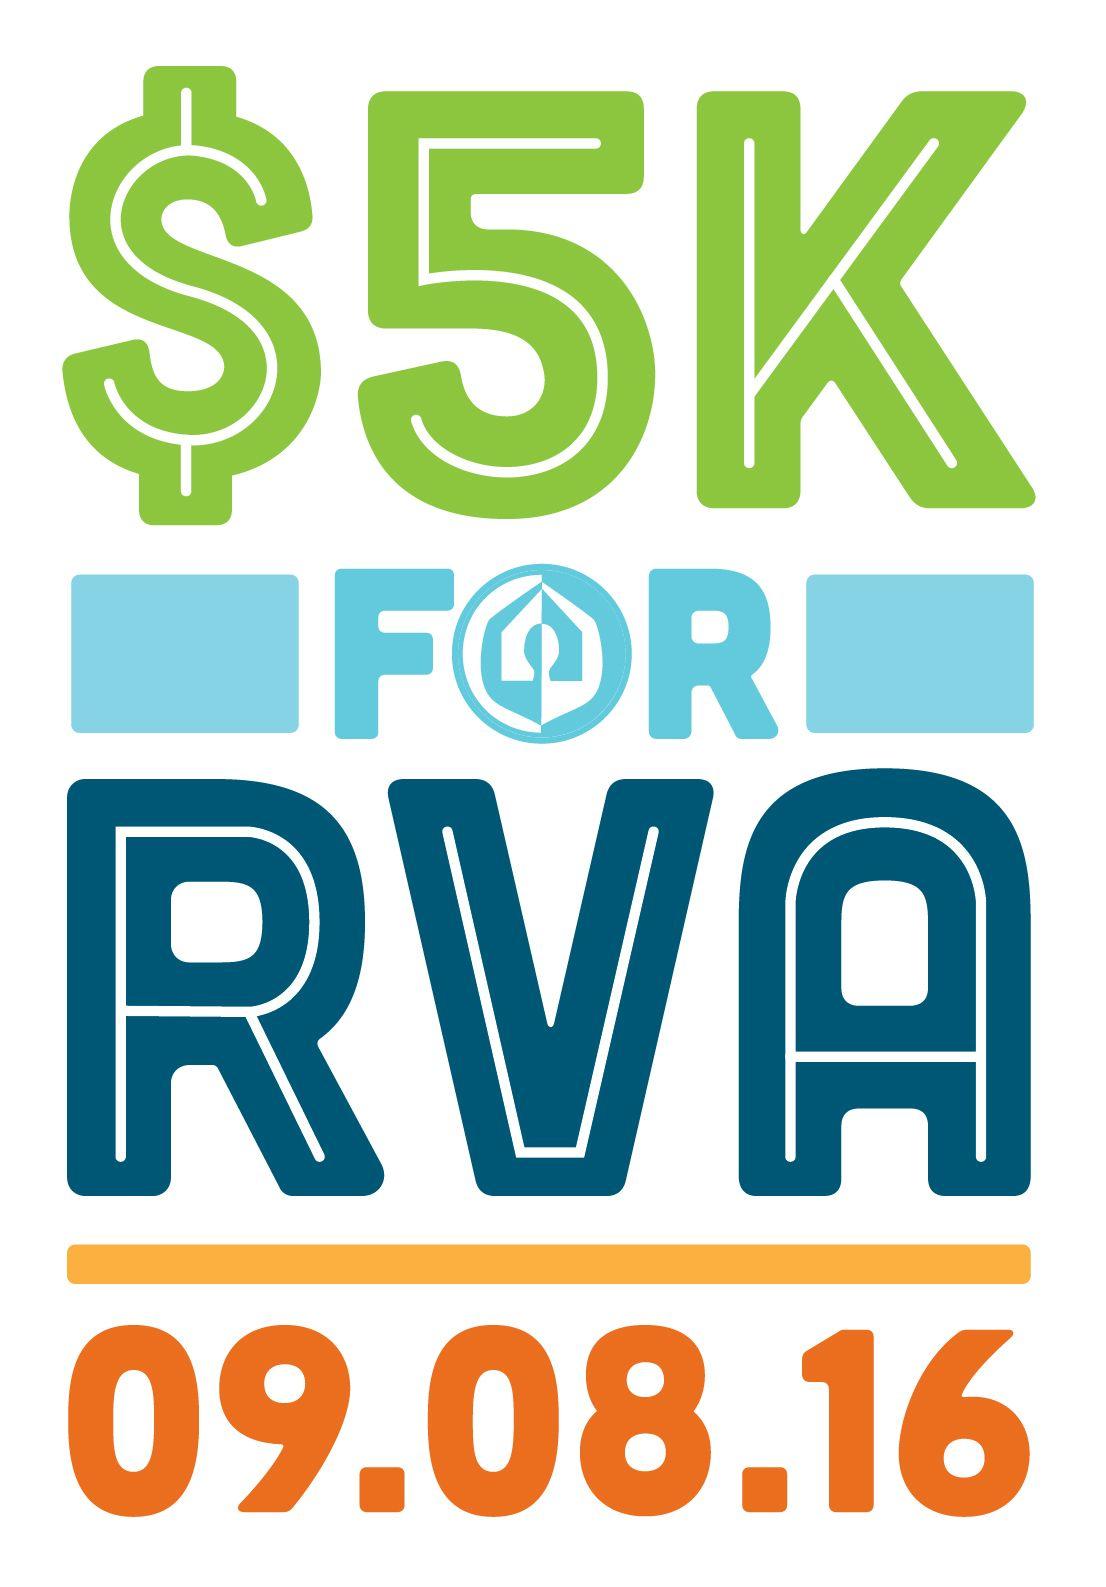 RVA Logo - 5k-for-rva-logo | Better Housing Coalition